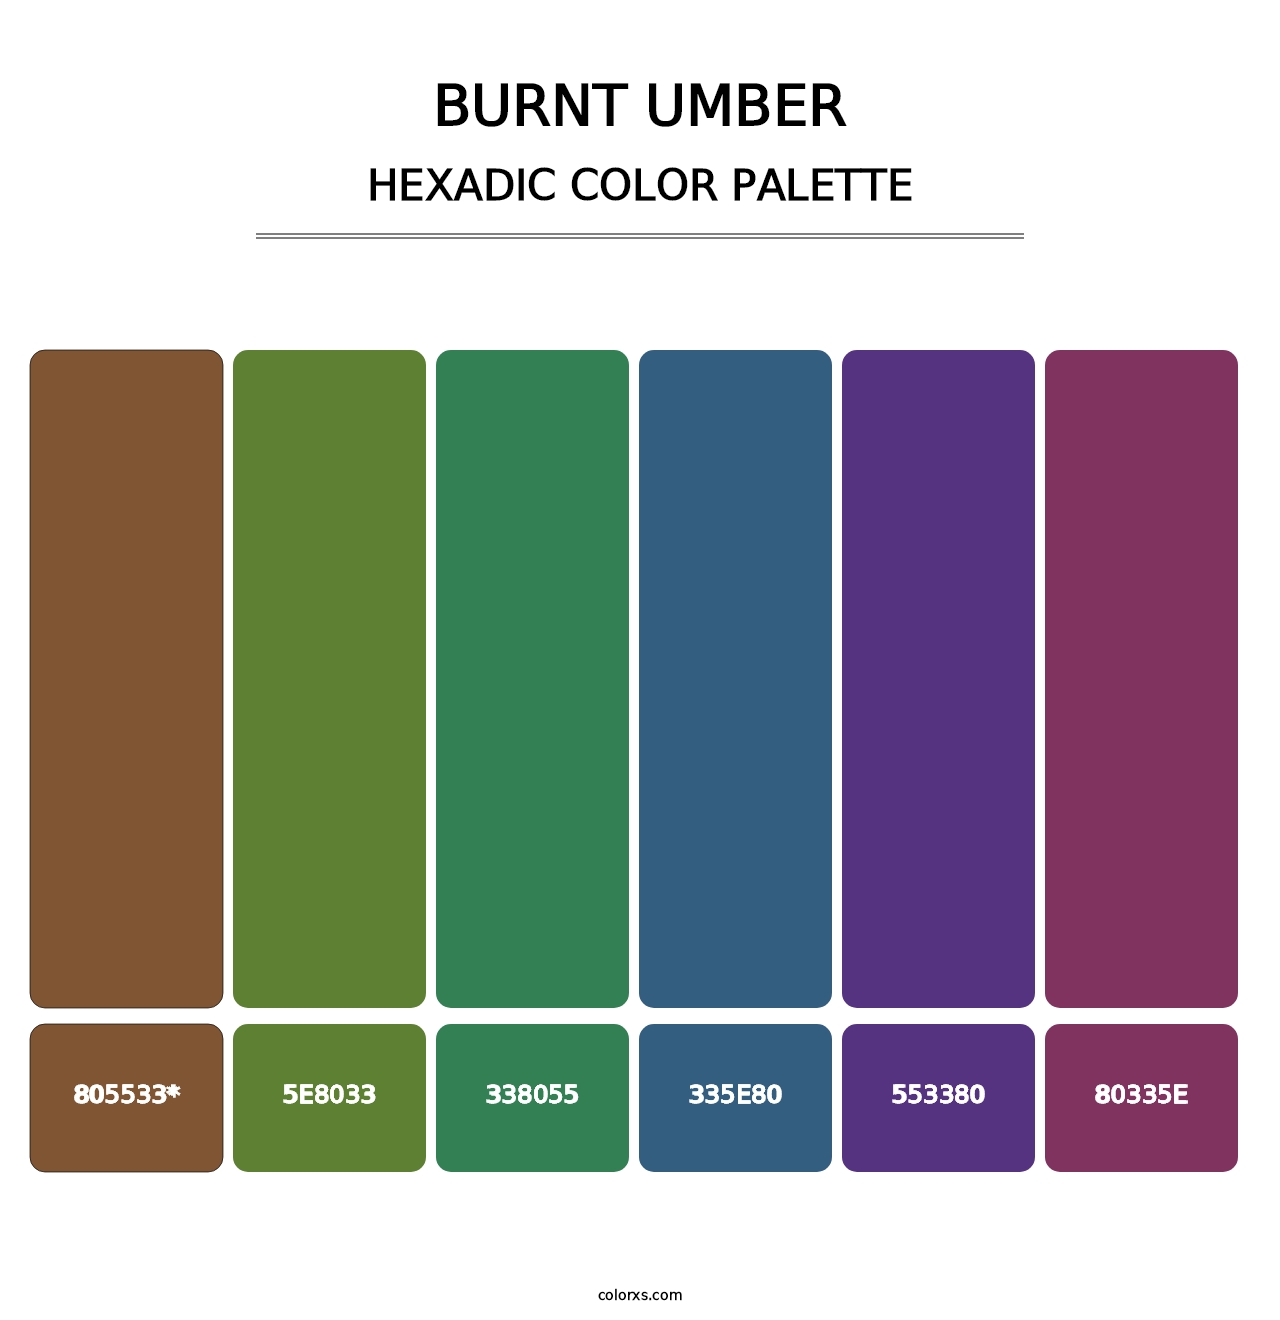 Burnt Umber - Hexadic Color Palette